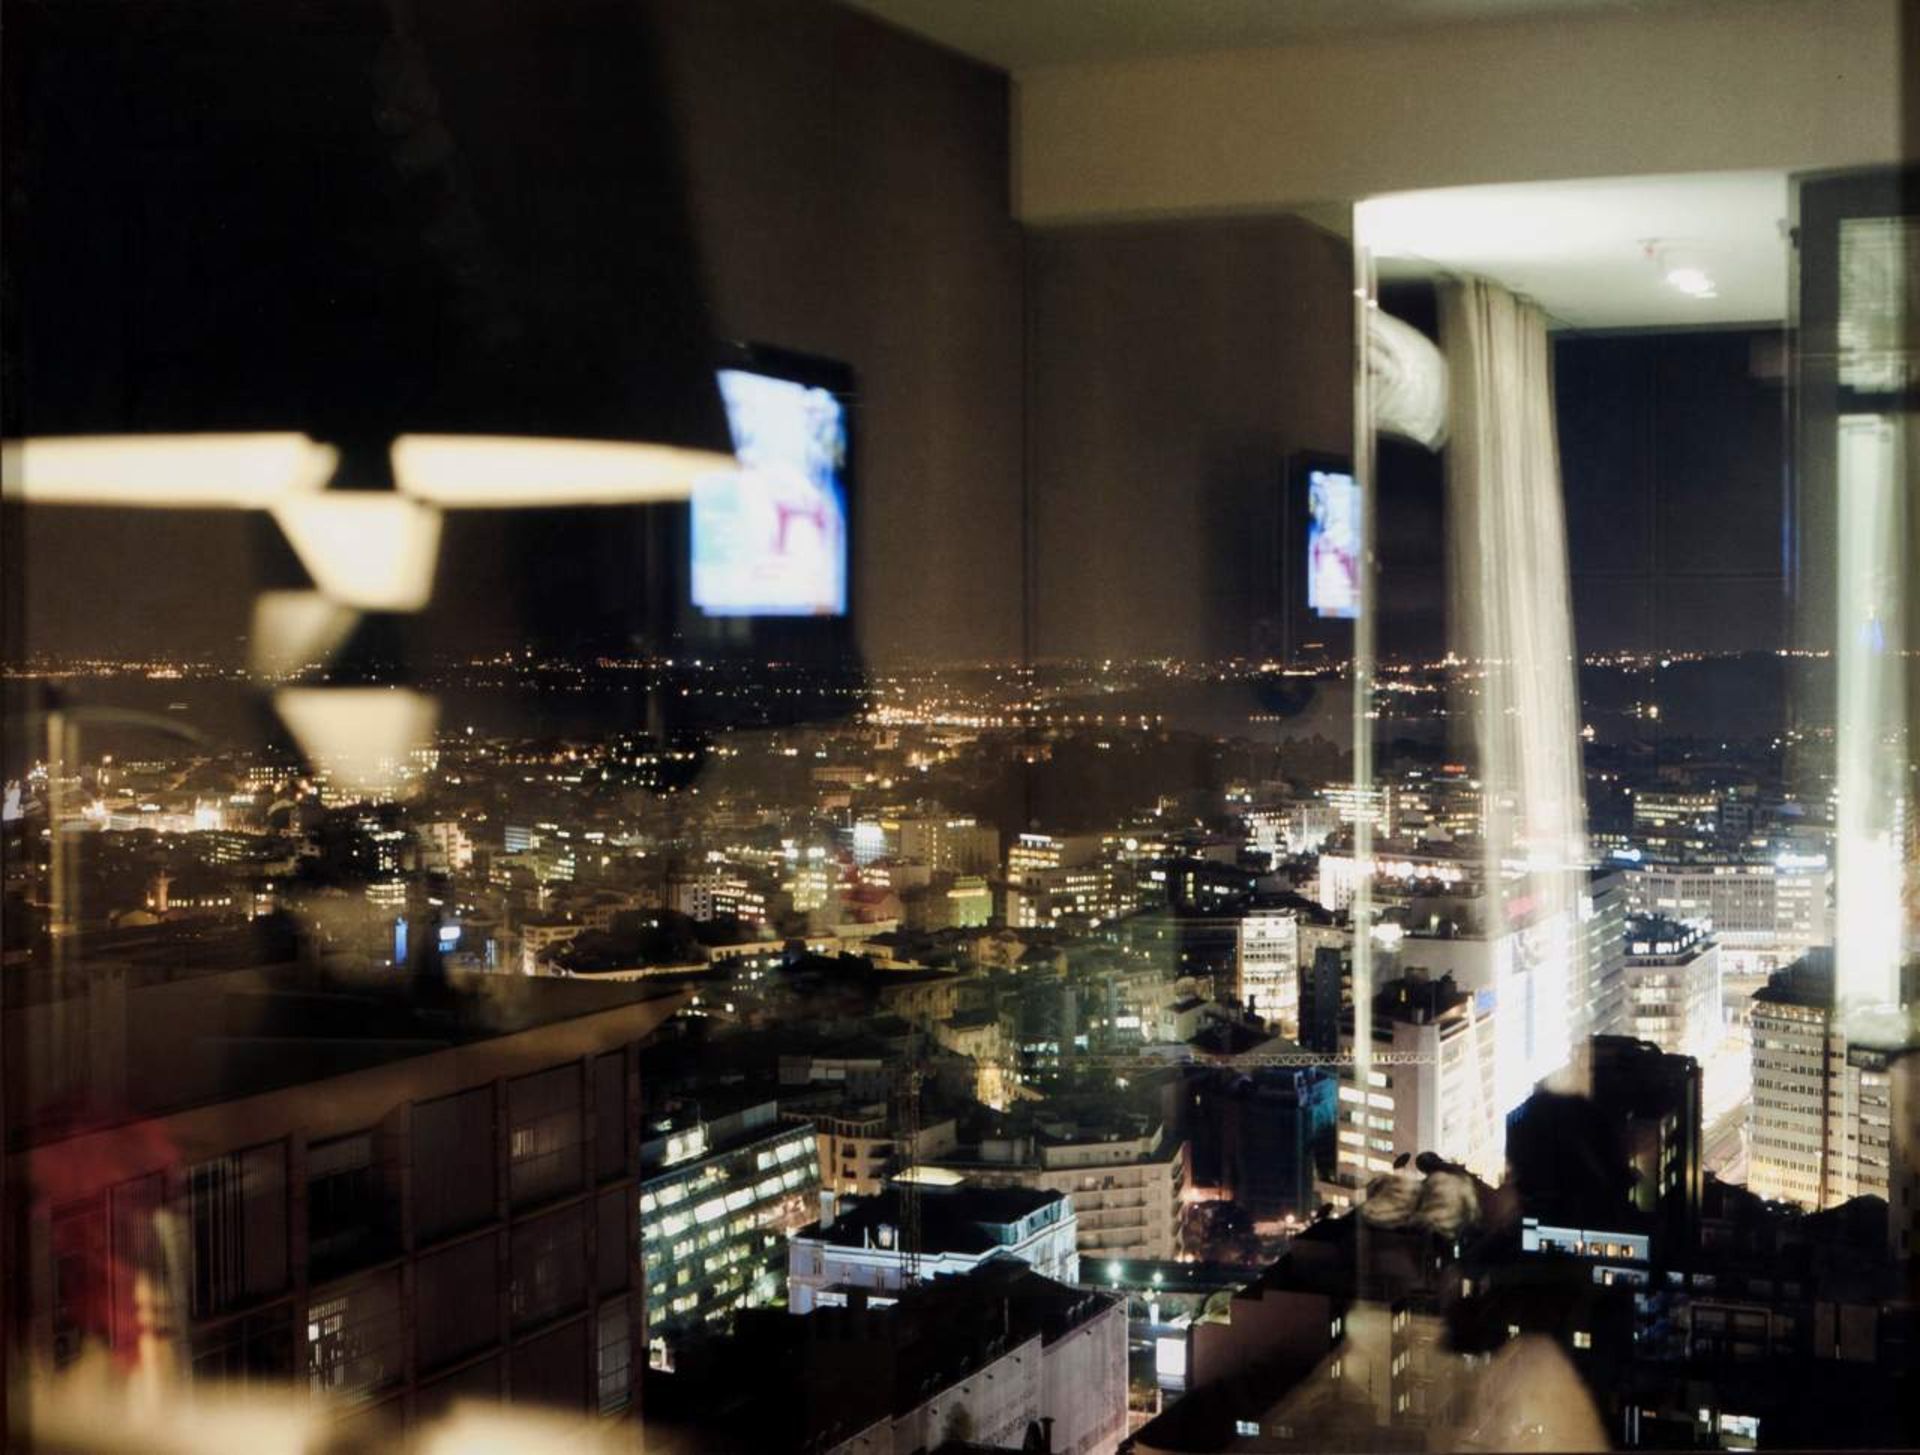 Nuno Cera (b.1972)
"A Room With a View #5 (Sheraton Lisboa Hotel e spa)"
Lambda print on PVC